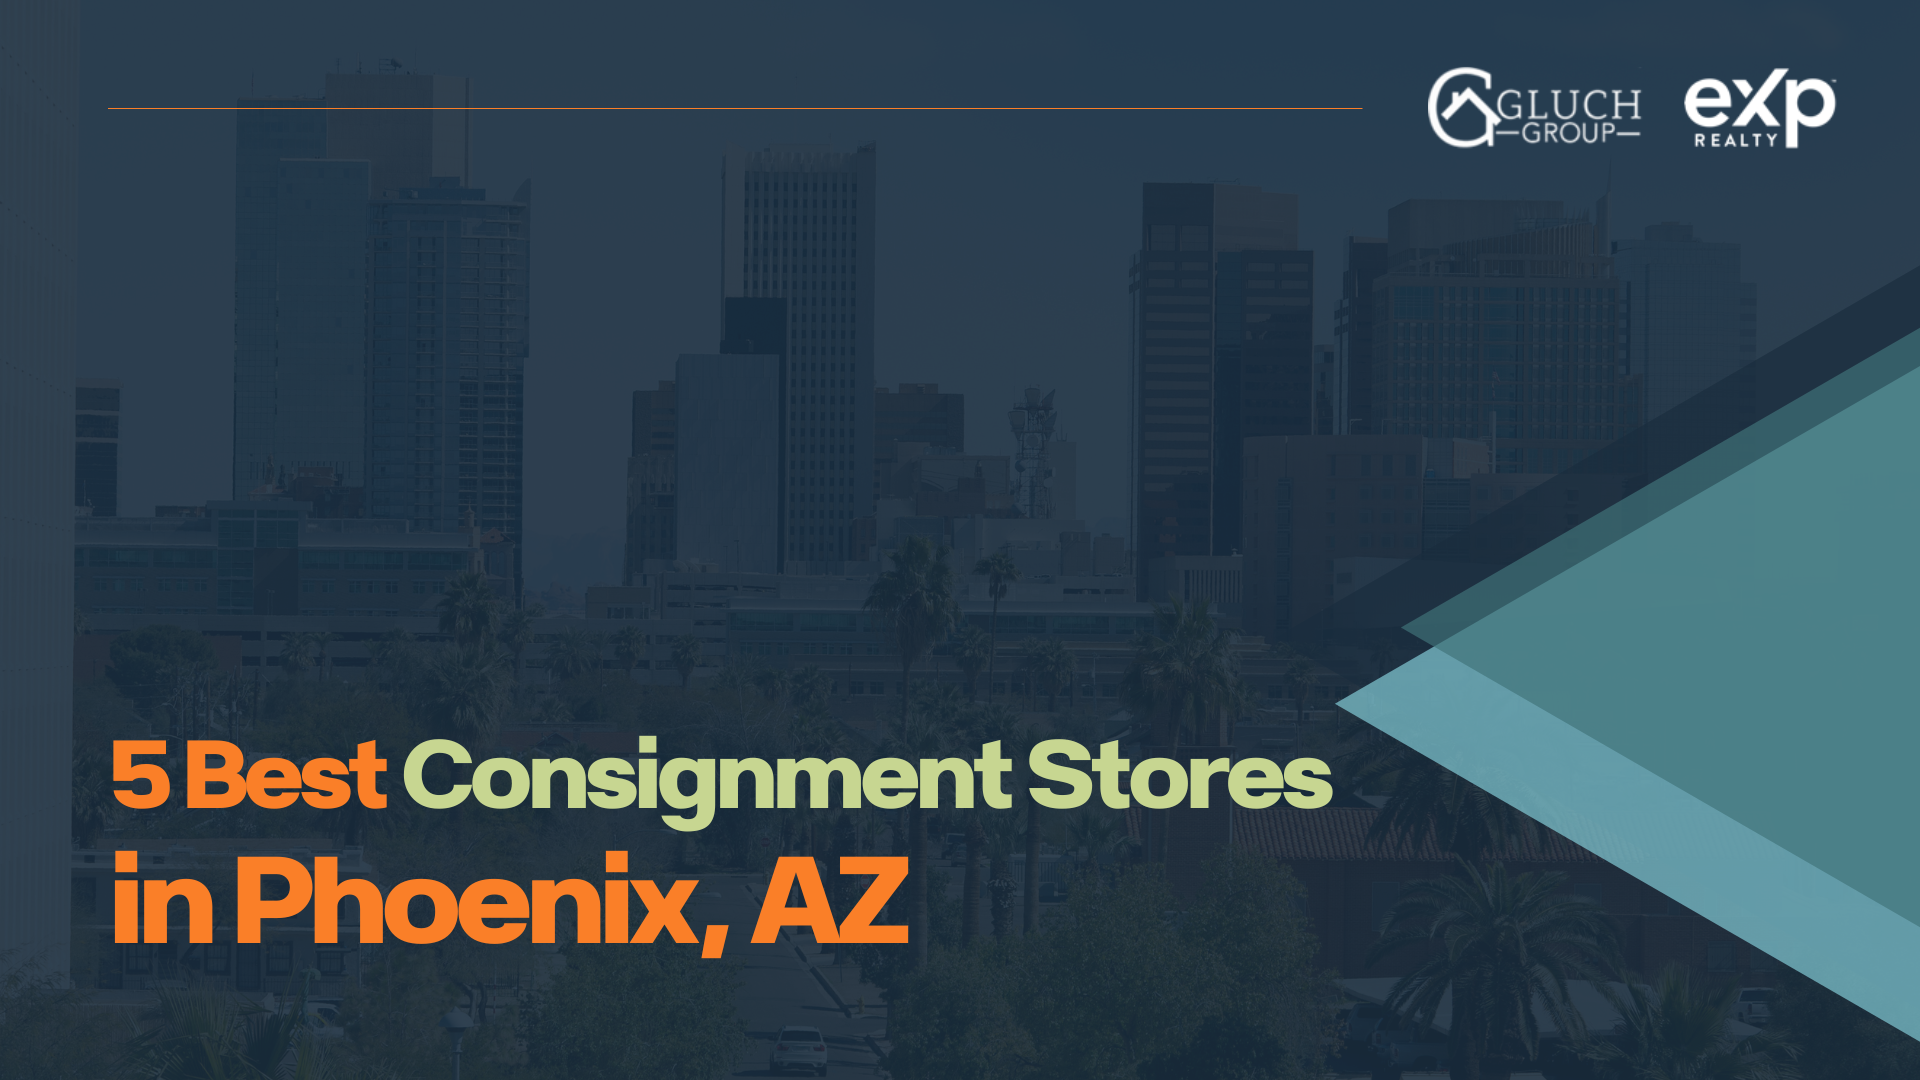 Consignment Shop in Phoenix, AZ 85001